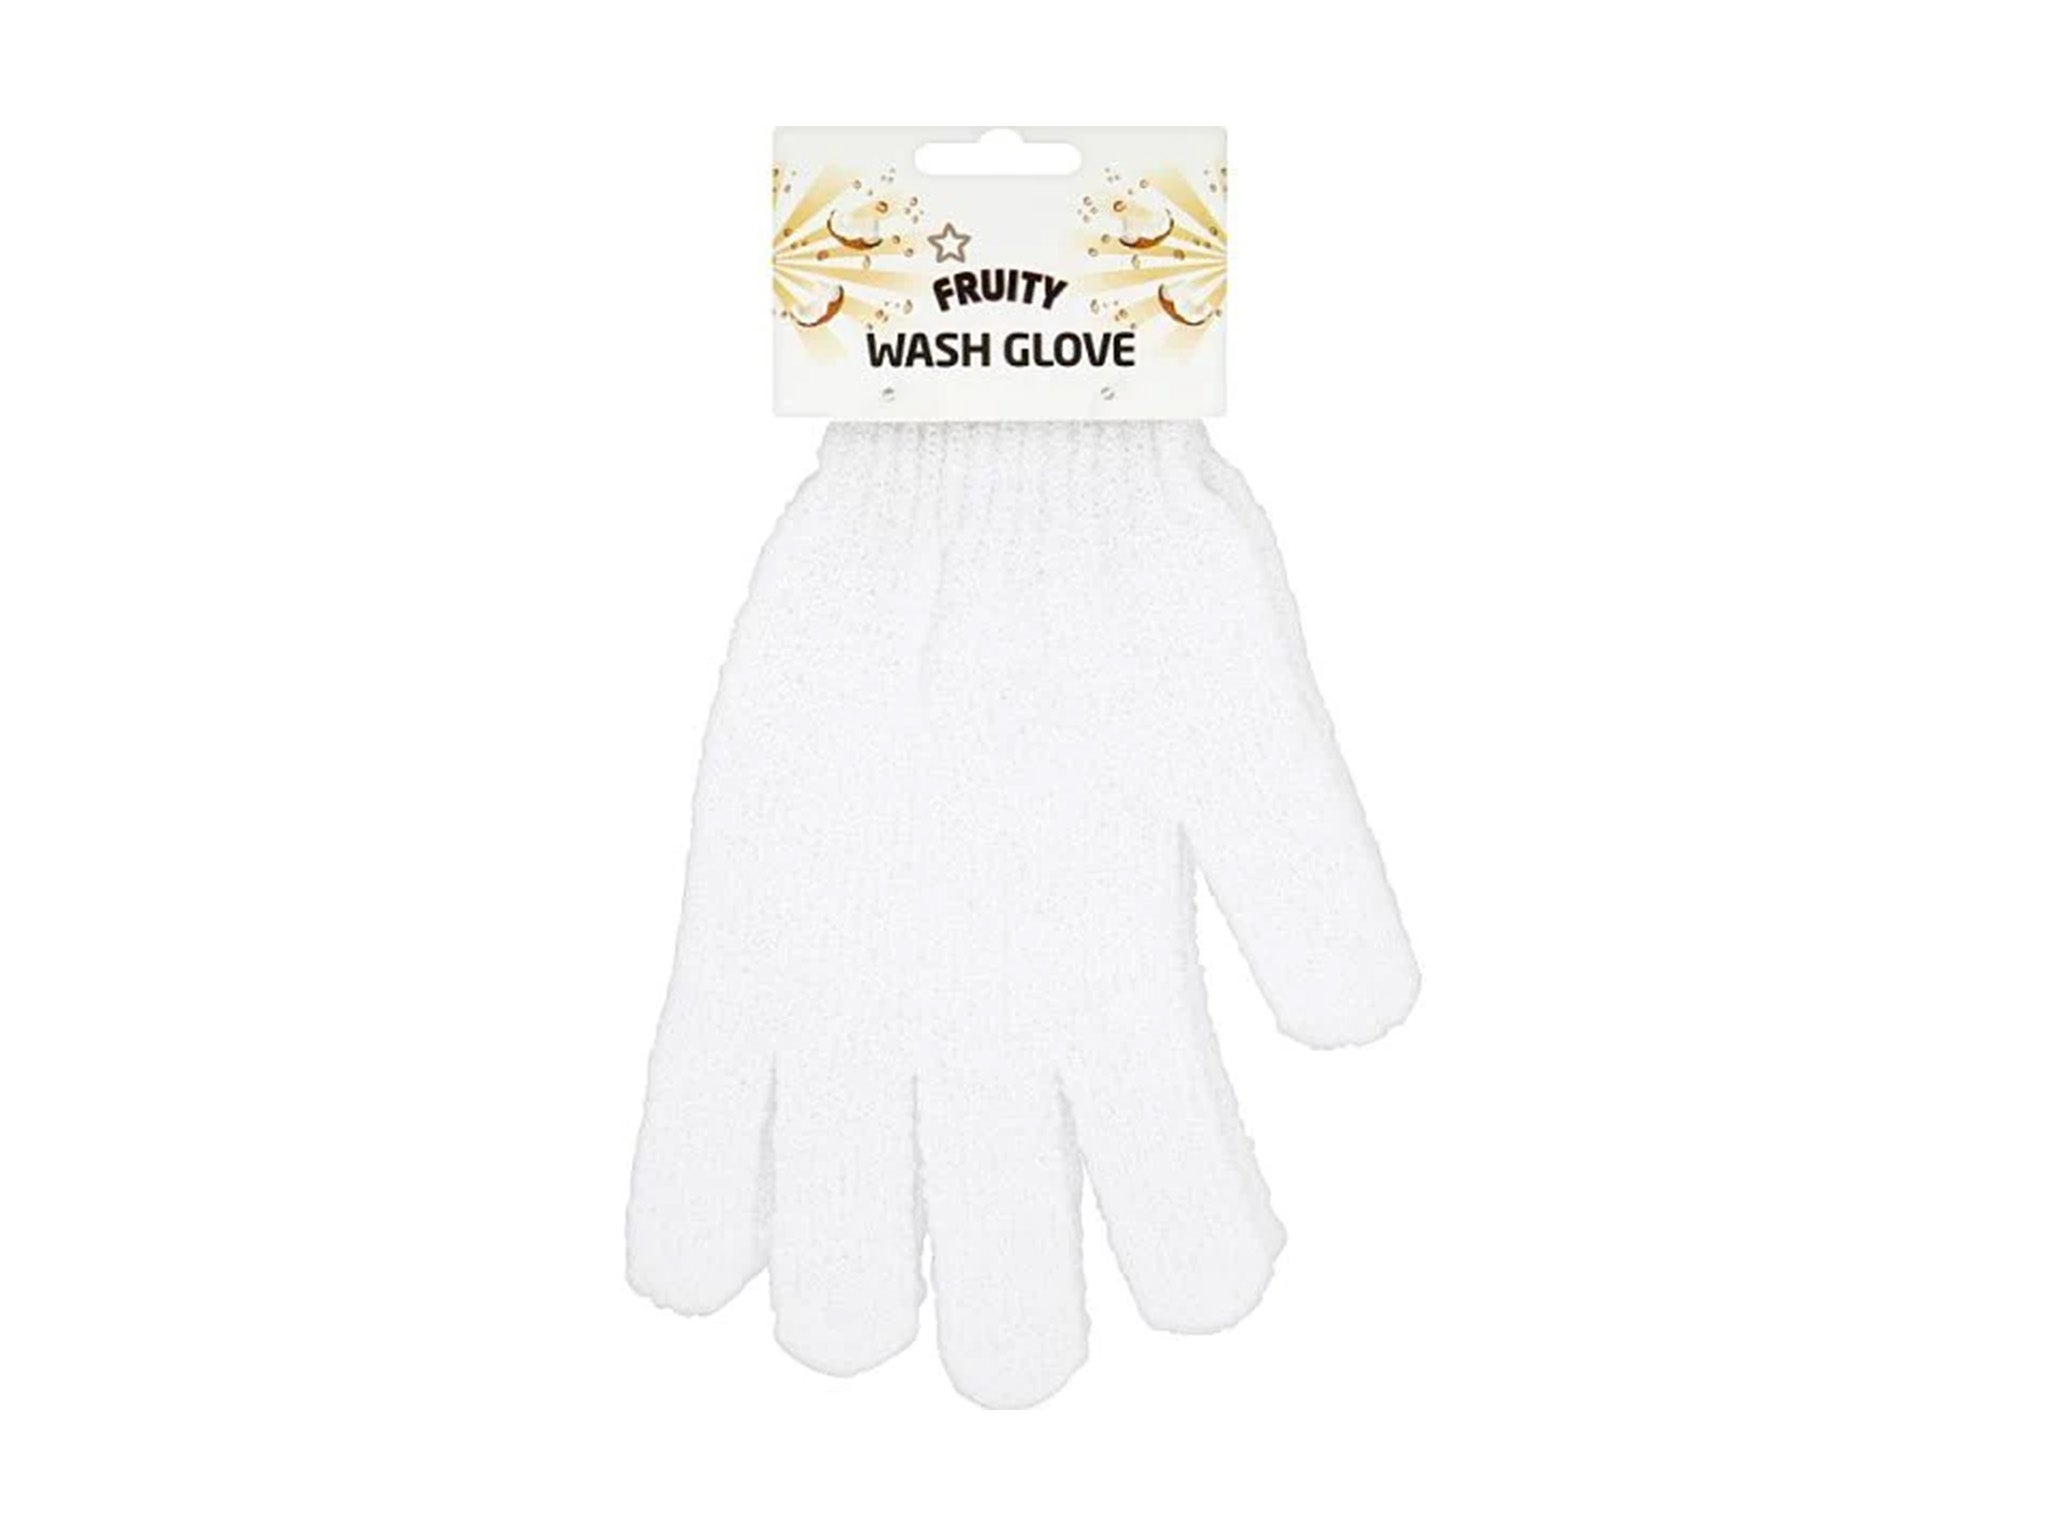 Superdrug fruity exfoliating body gloves 1 pair white